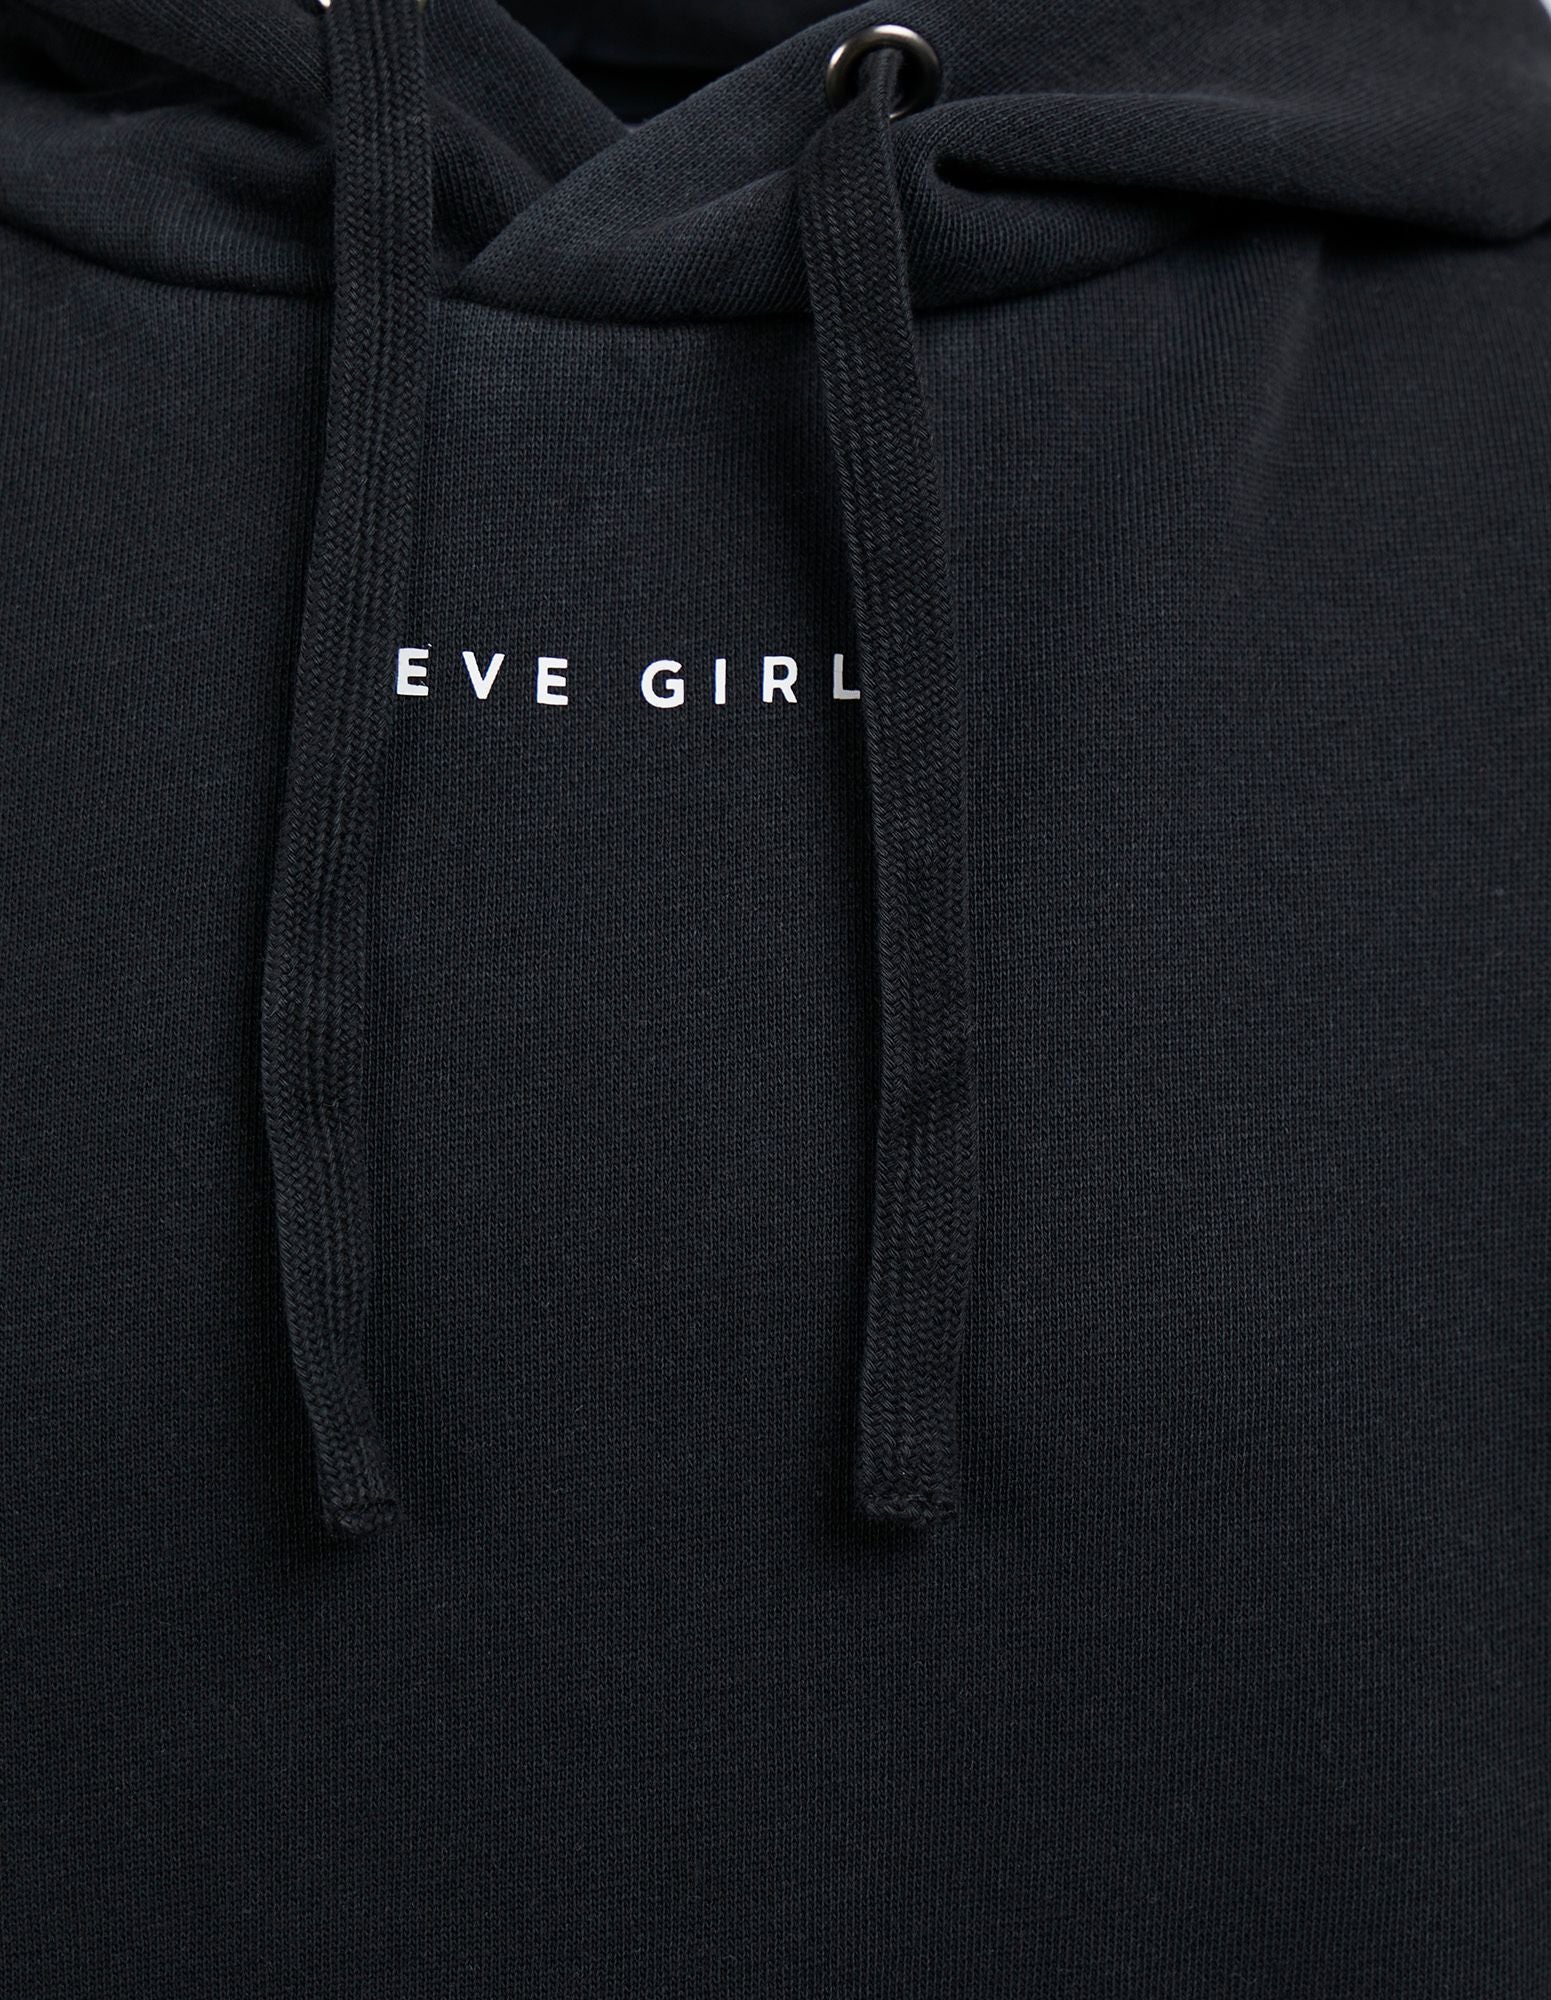 Eve Girl - Washed Hoody - Black